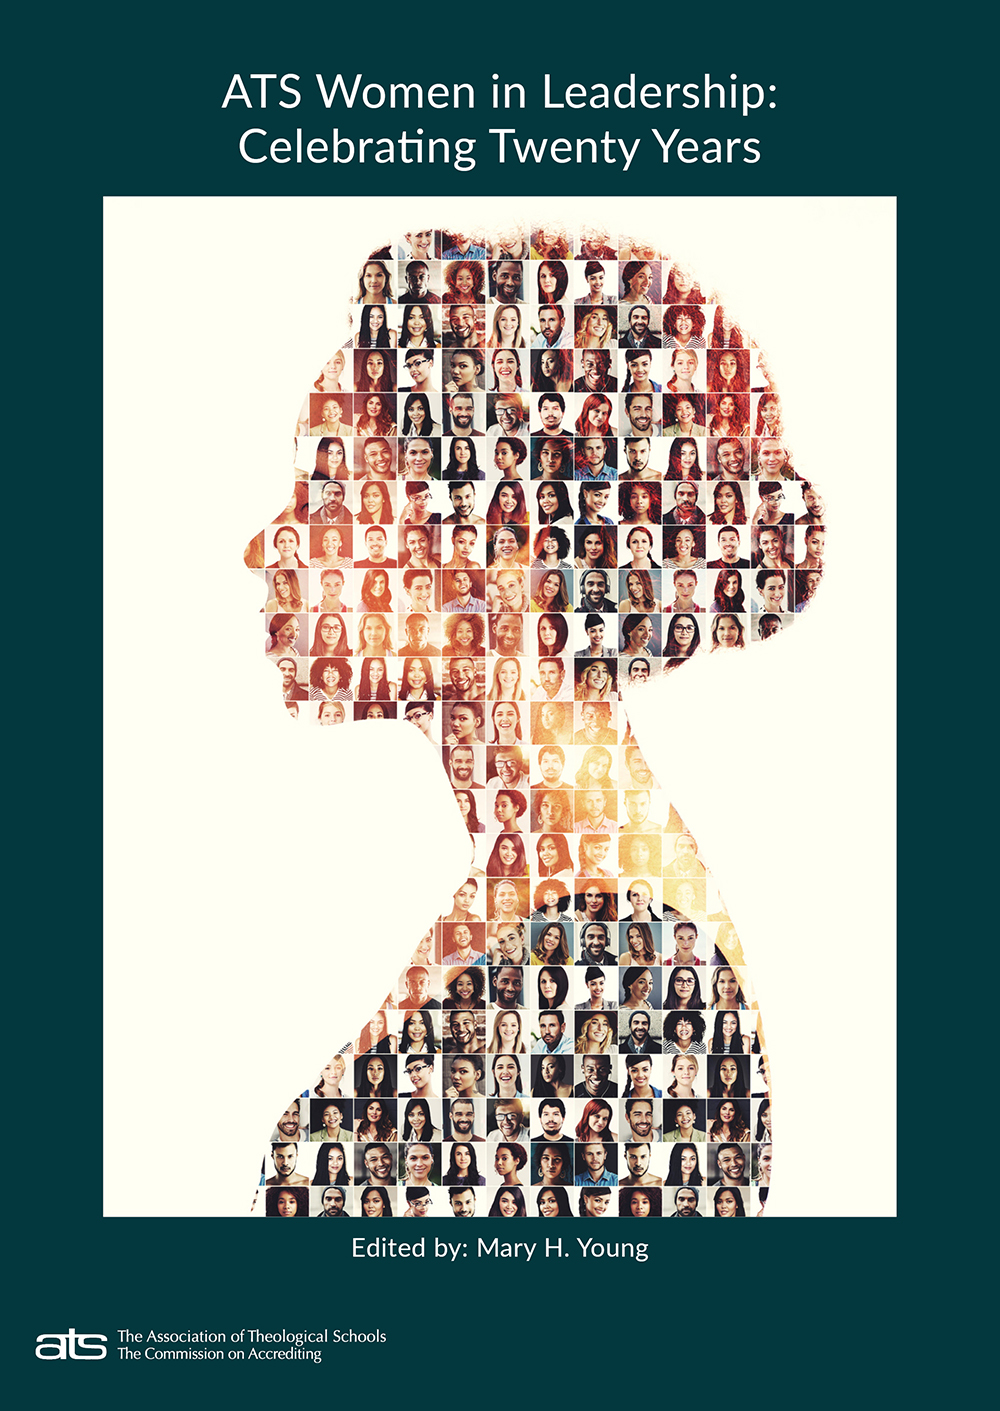 ATS publication honors twenty years of women leaders